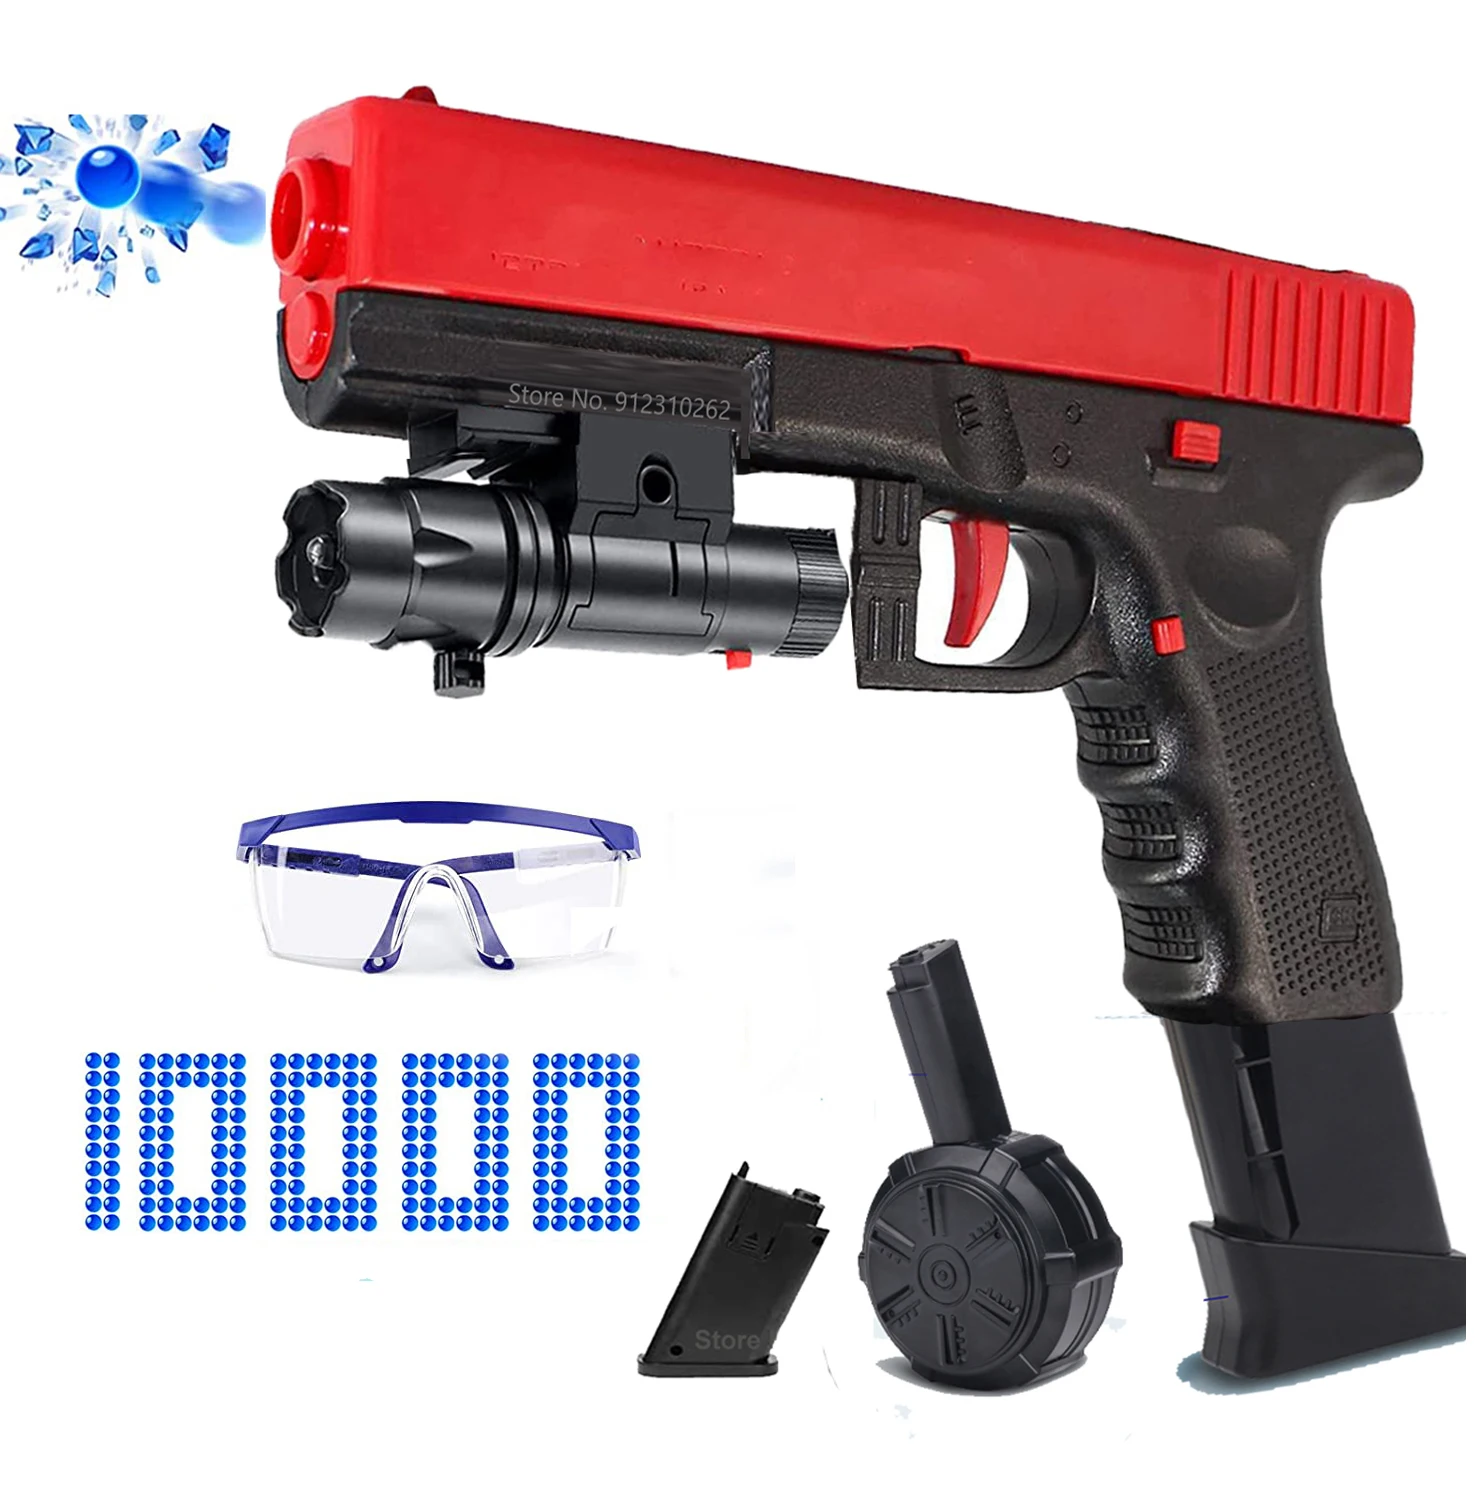 

2022 Electric & Manual Water Splatter Ball Toy Gun Paintball Pistol Outdoor Games CS Gel Blaster Airsoft Handgun For Boys Gift